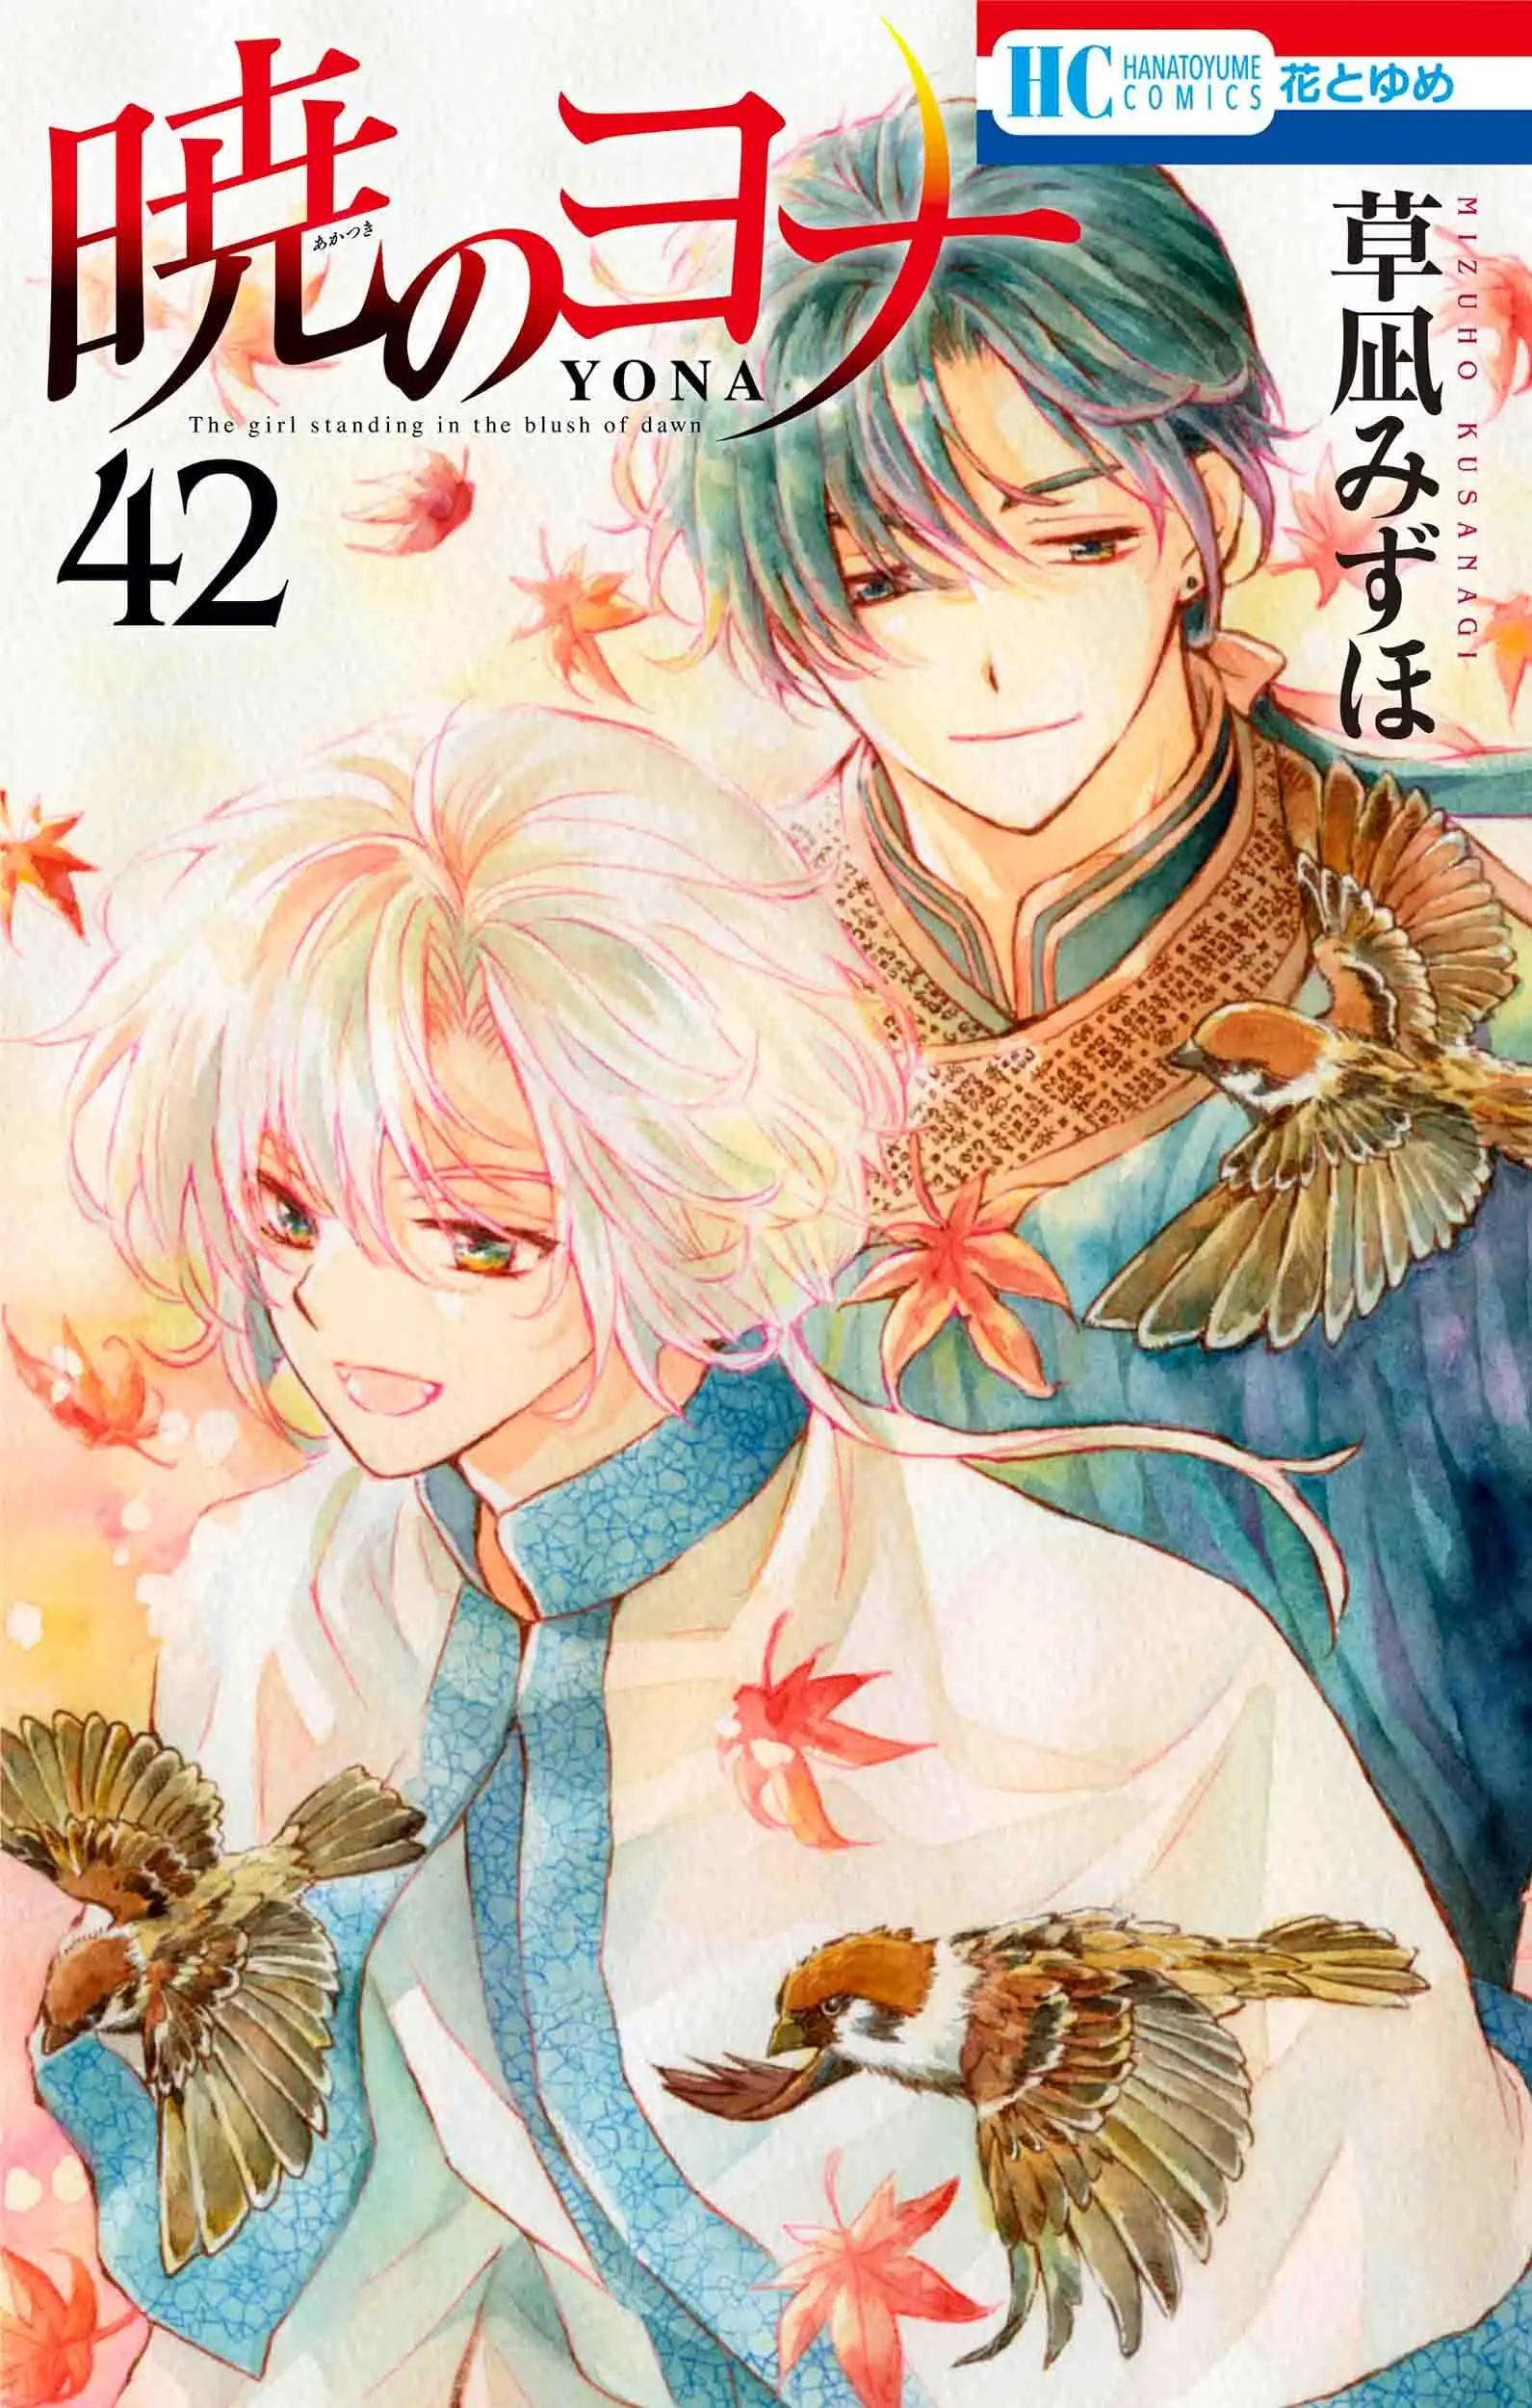 Manga Akatsuki no Yona (Yona of the Dawn) vol.42 (暁のヨナ 42 (花とゆめコミックス))  / Kusanagi Mizuho